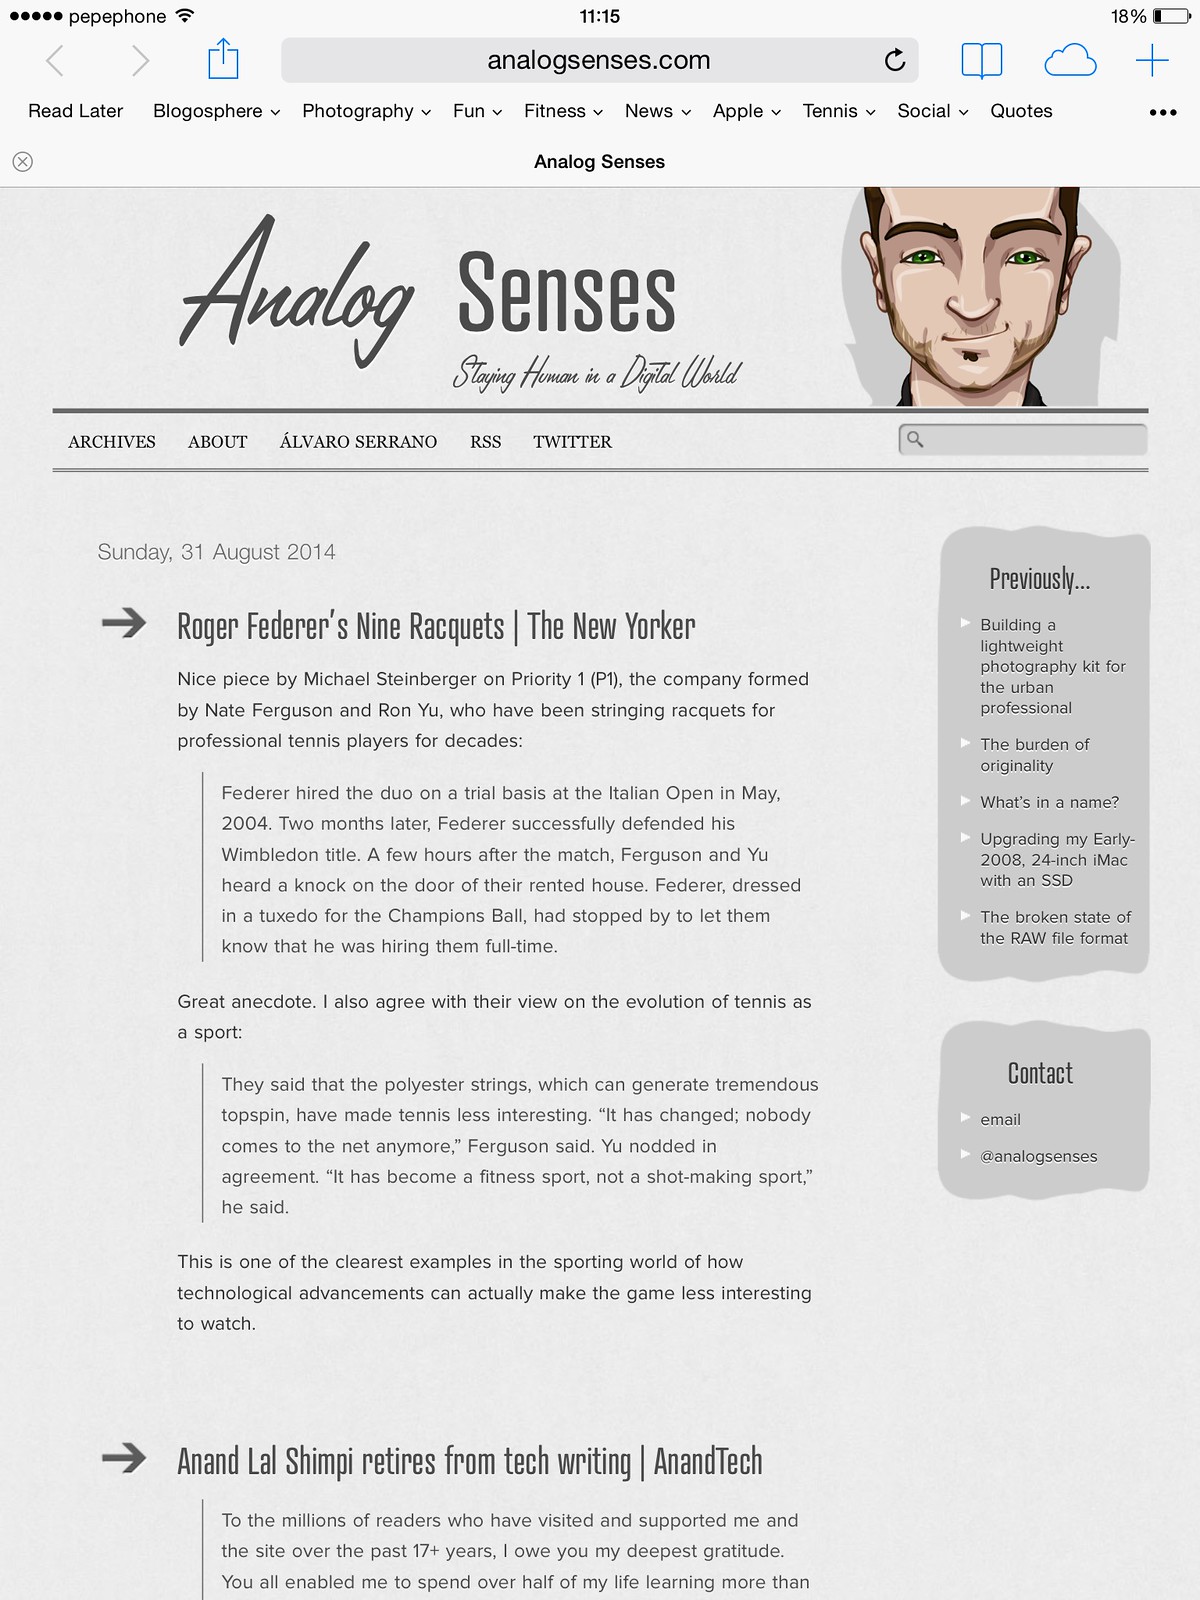 Analog Senses on iPad - WordPress vs. Octopress by Álvaro Serrano, on Flickr